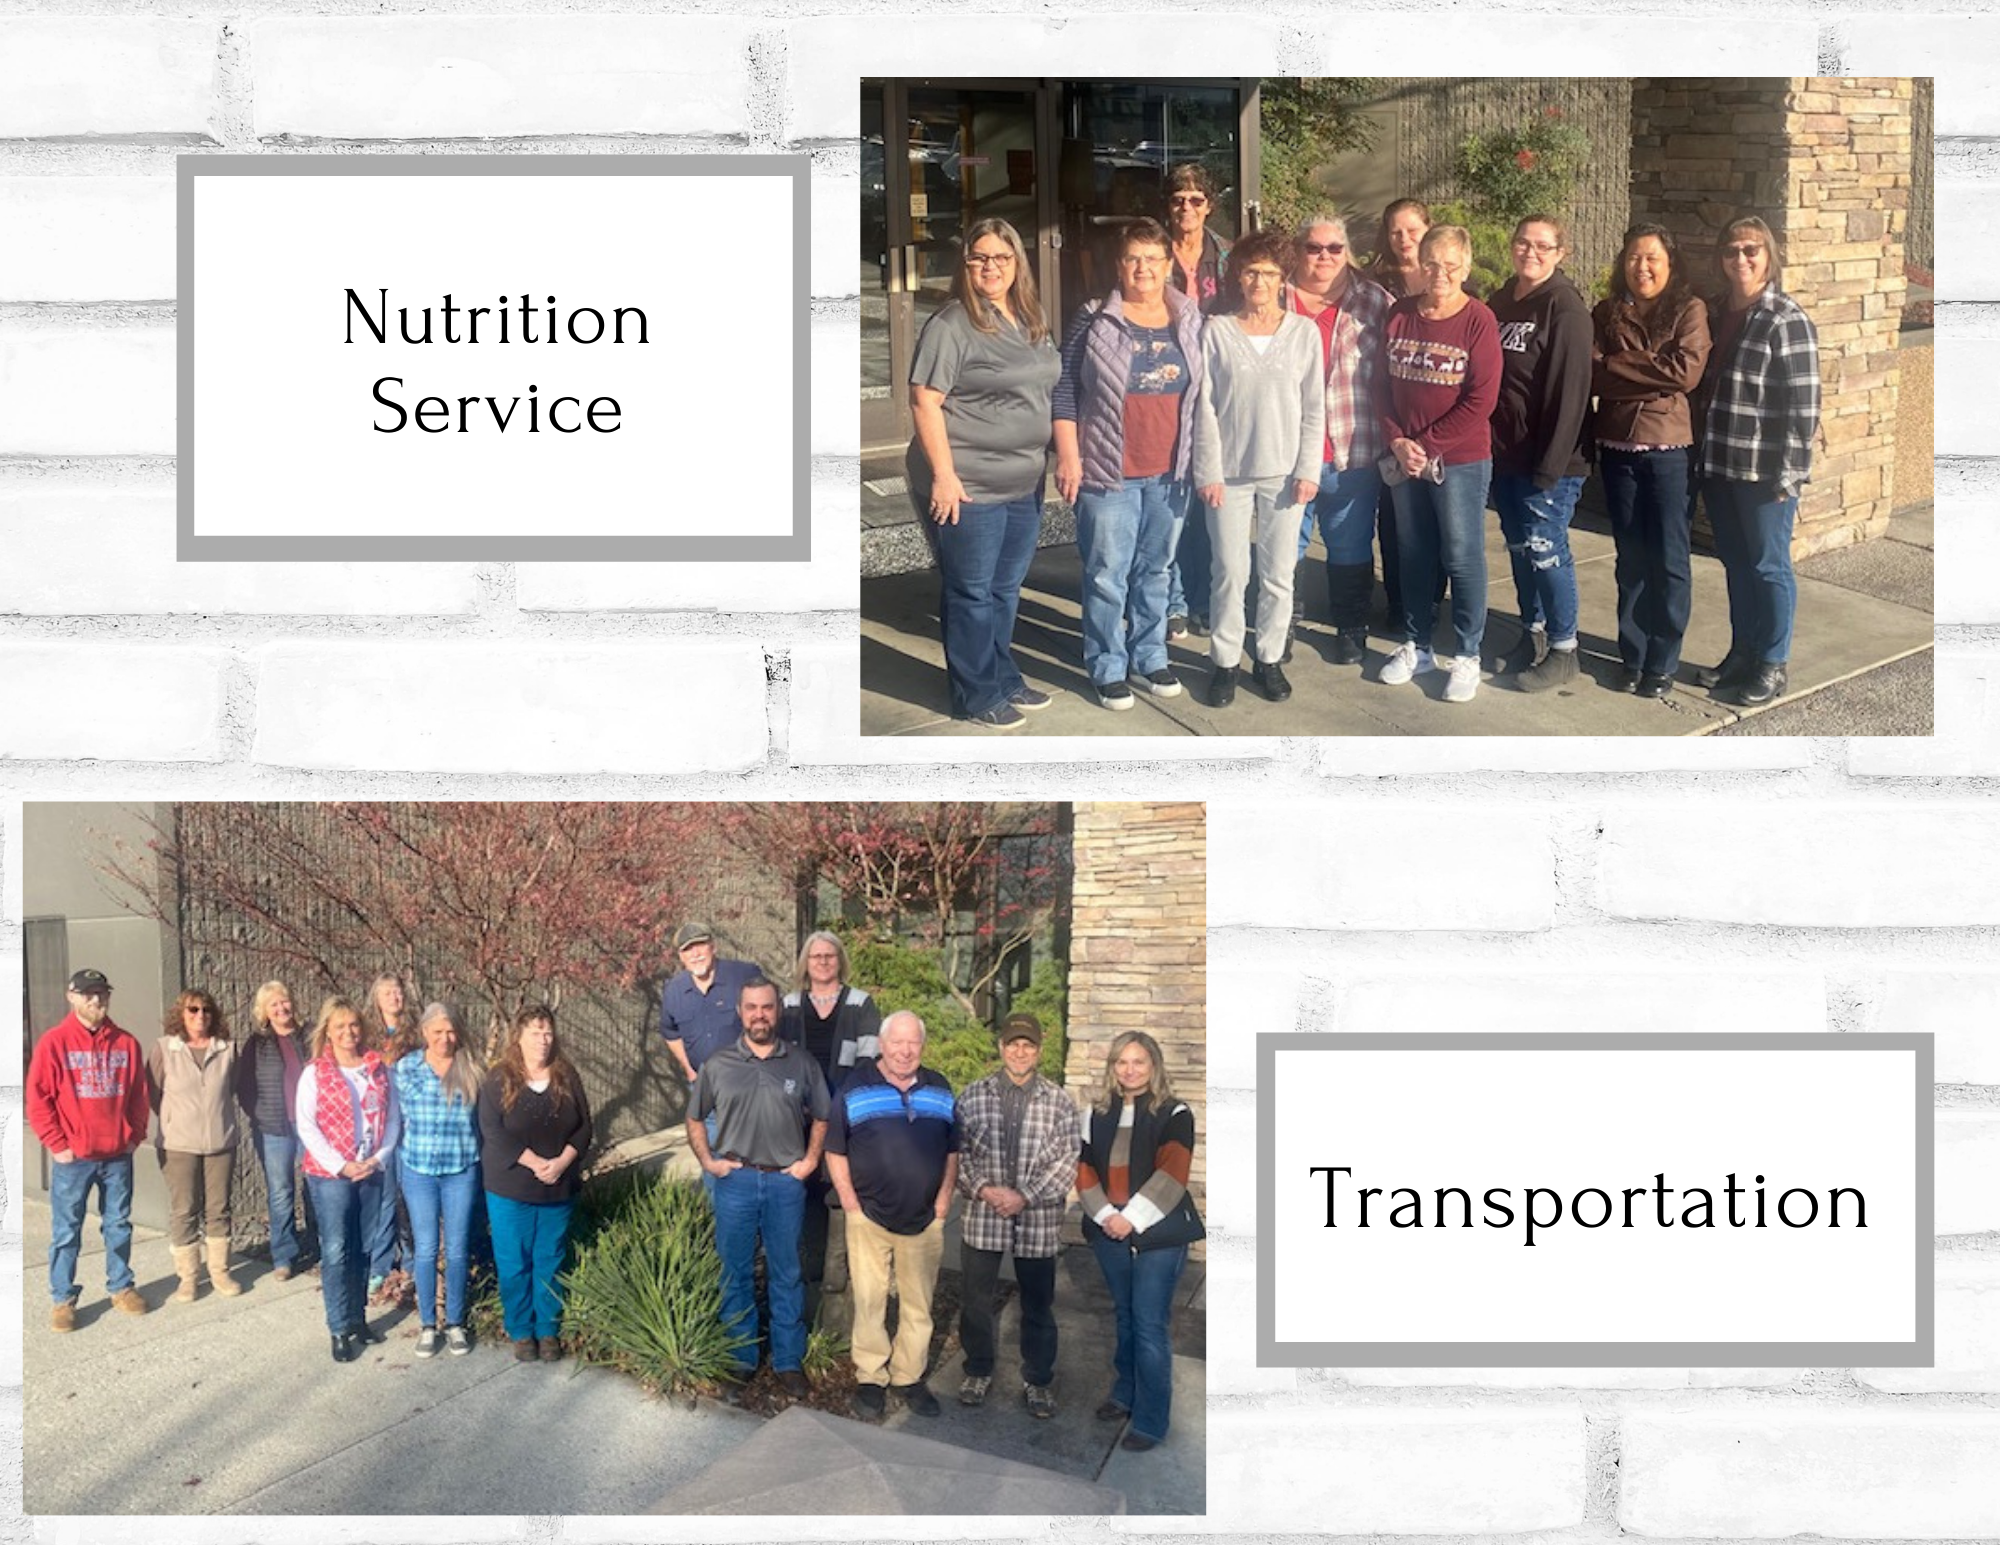 Nutrition Service, Transportation